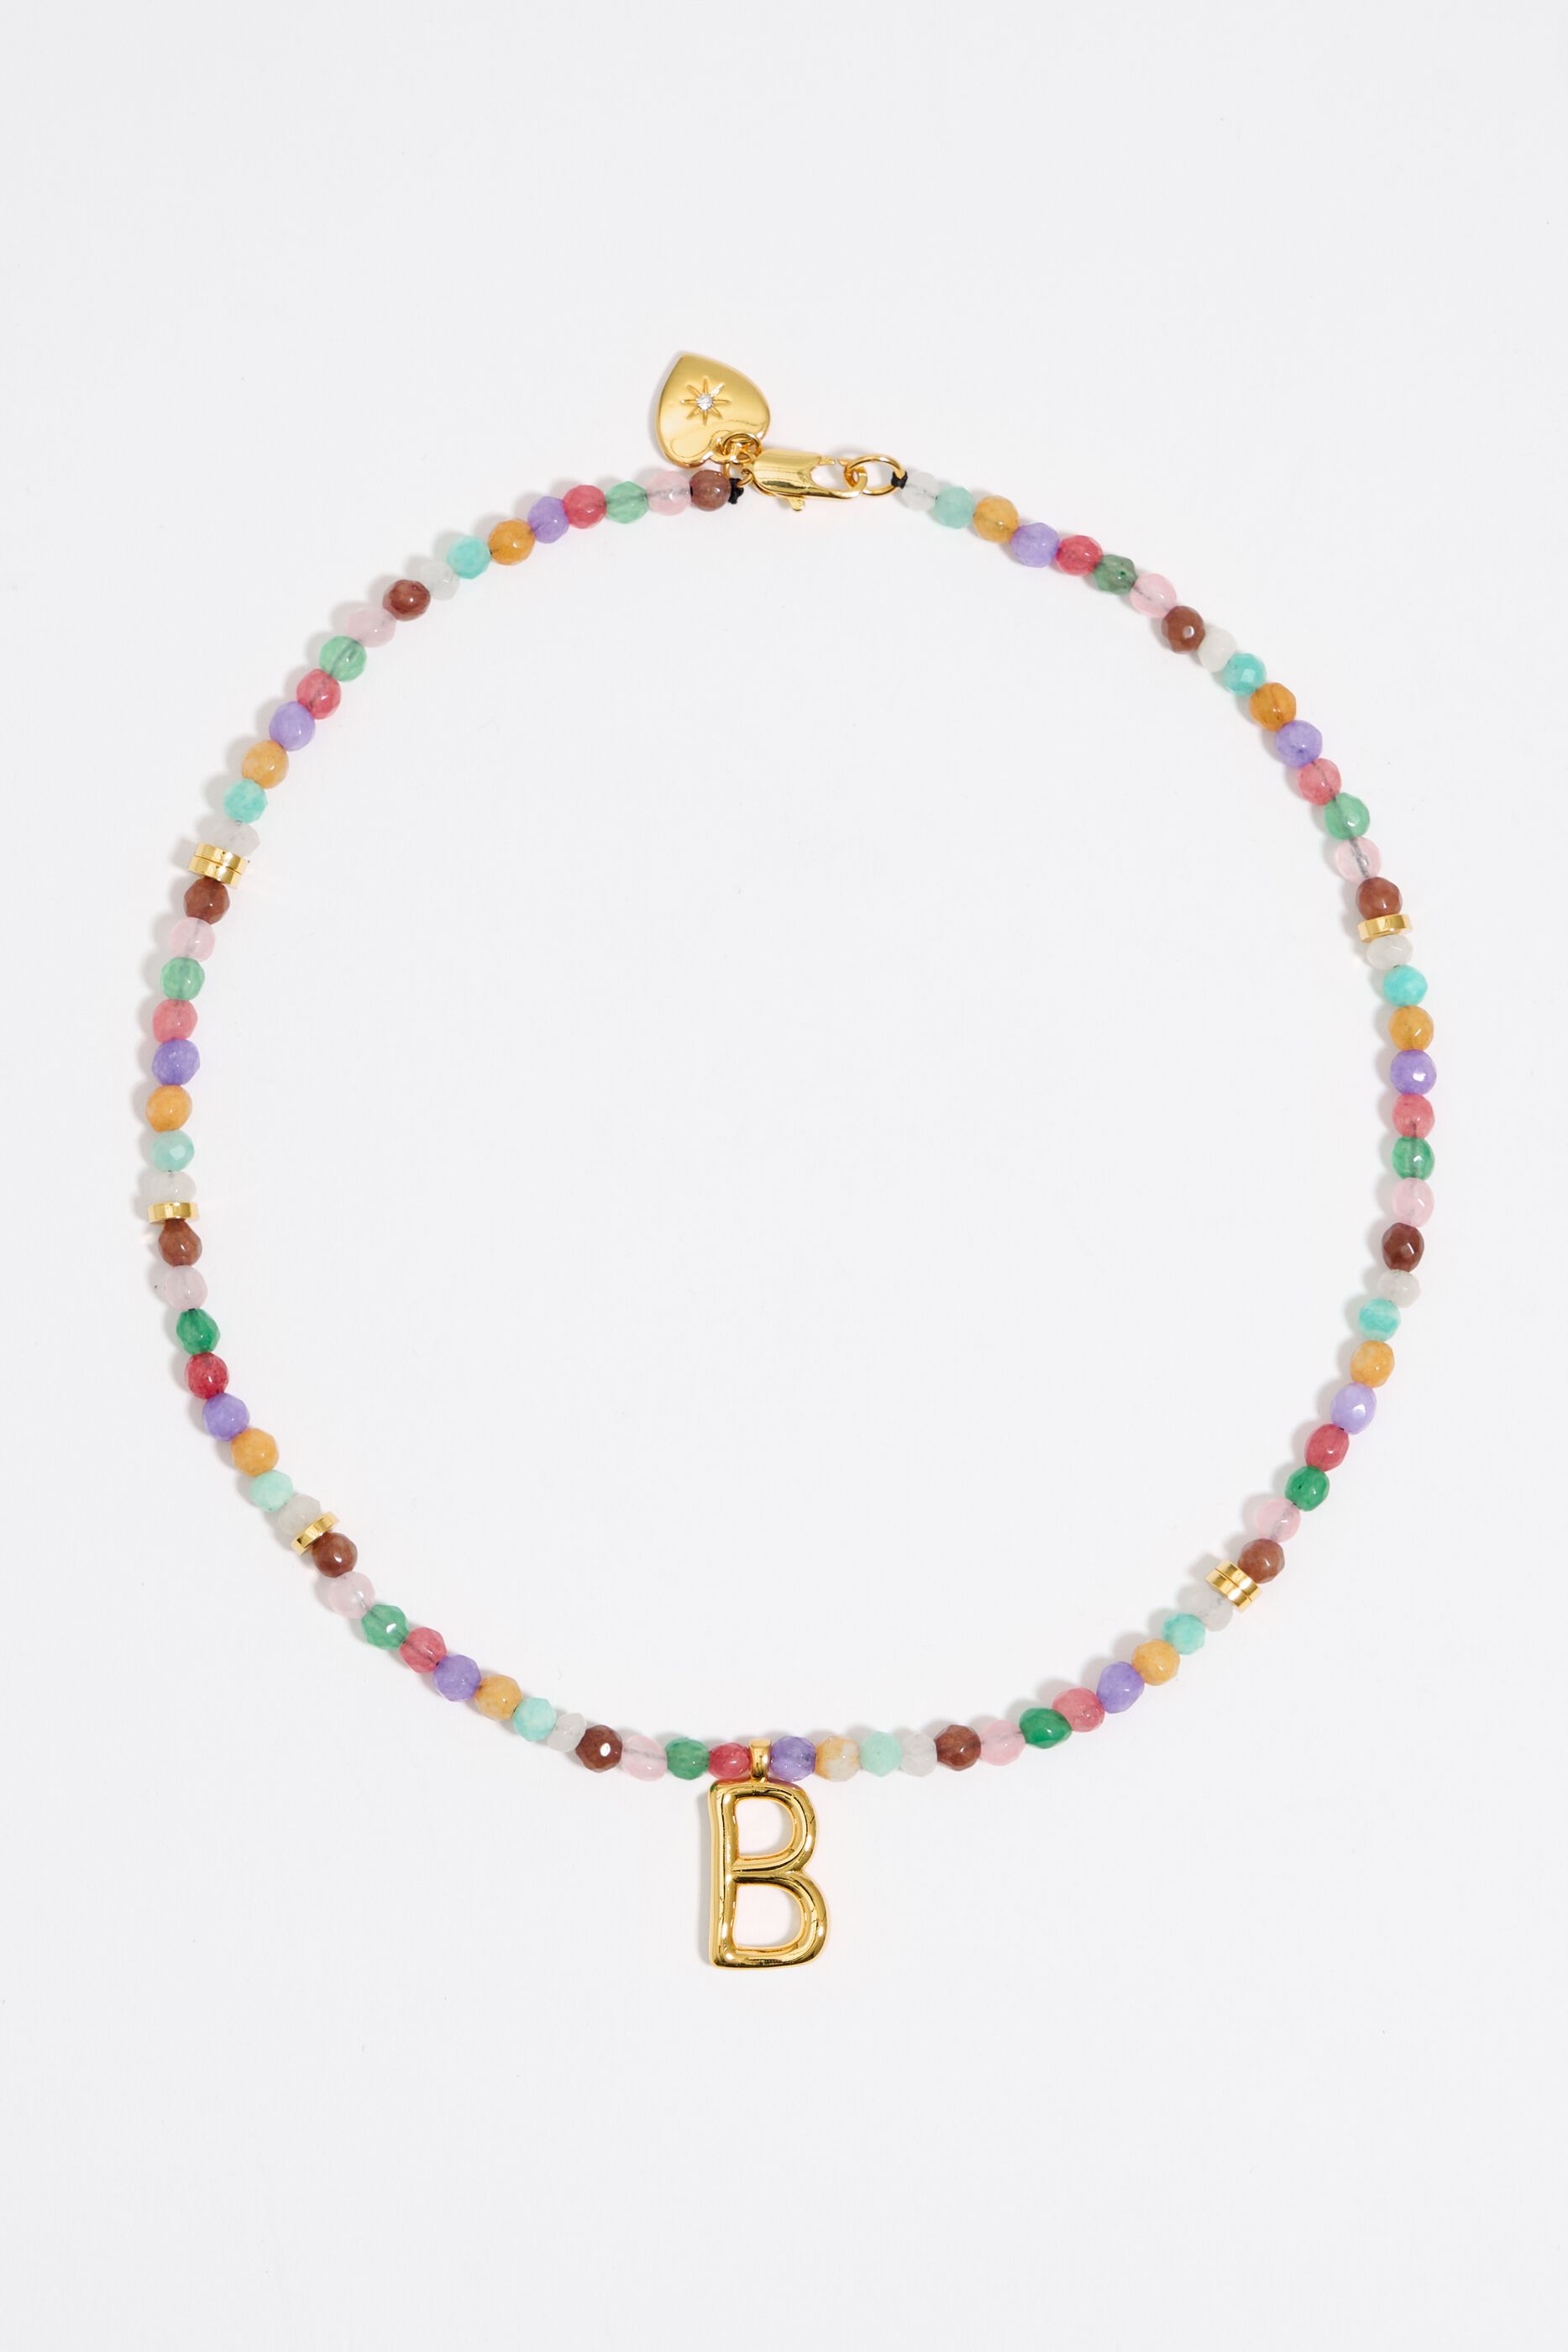 metal letter b thick link chain bracelet | Fashion bracelets, Bracelet  designs, Bead bangles